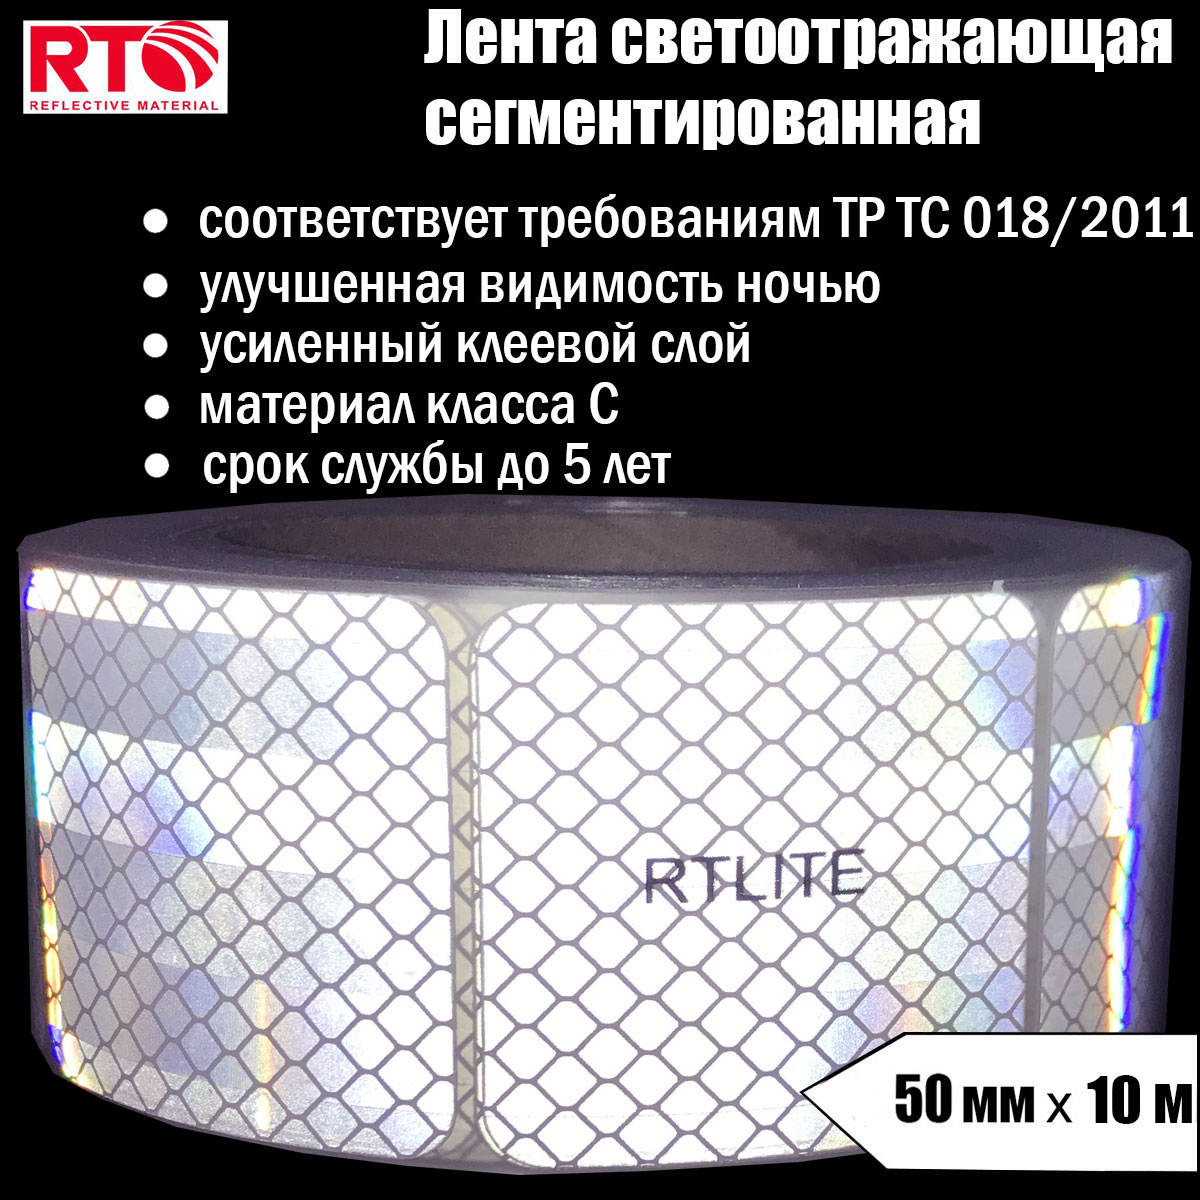 Лента светоотражающая сегментированная RTLITE RT-V104 для контурной маркировки, 50мм х 10м лента световозвращающая для контурной маркировки rtlite rt v104 50 8 мм х 50 м красная